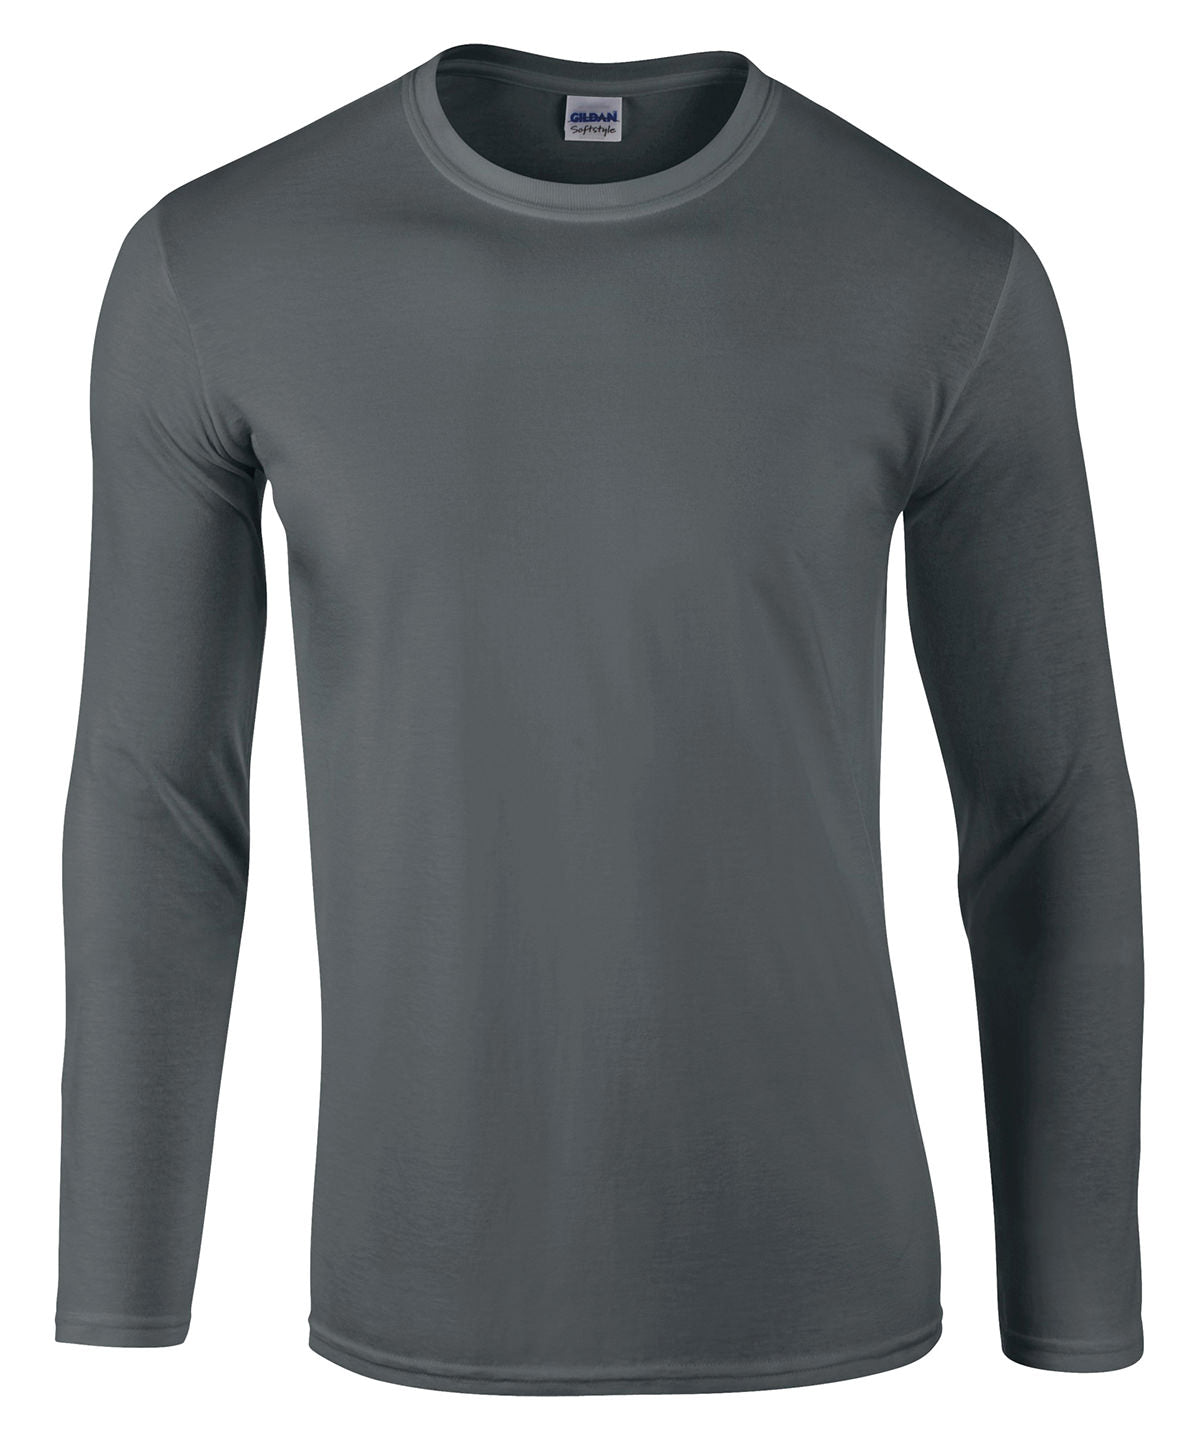 Personalised T-Shirts - Black Gildan Softstyle™ long sleeve t-shirt